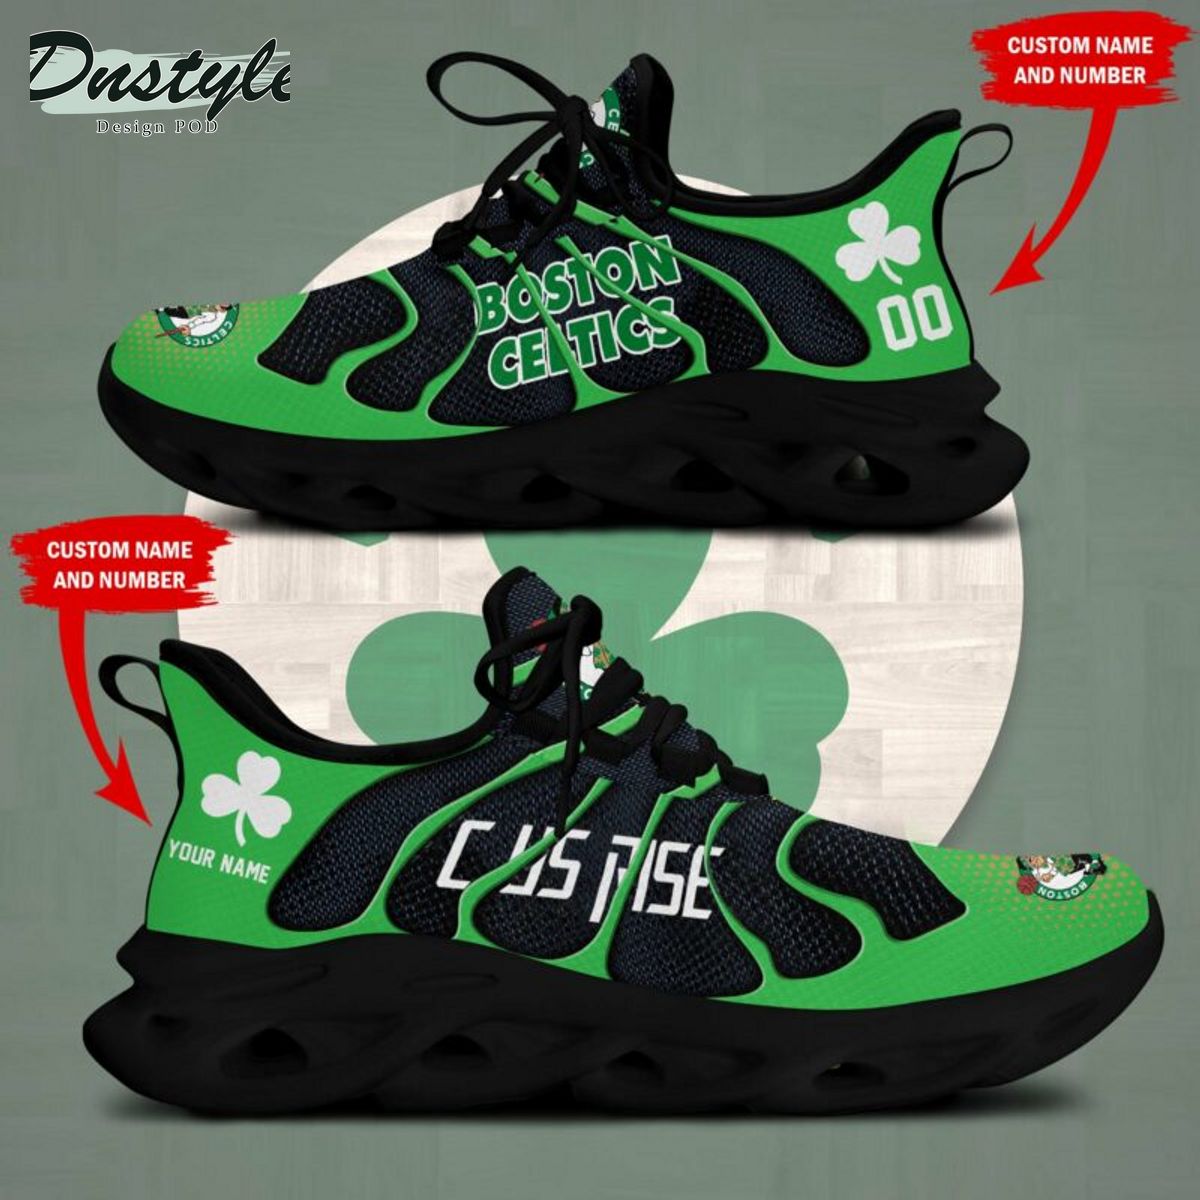 Boston Celtics NBA Personalized Max Soul Shoes